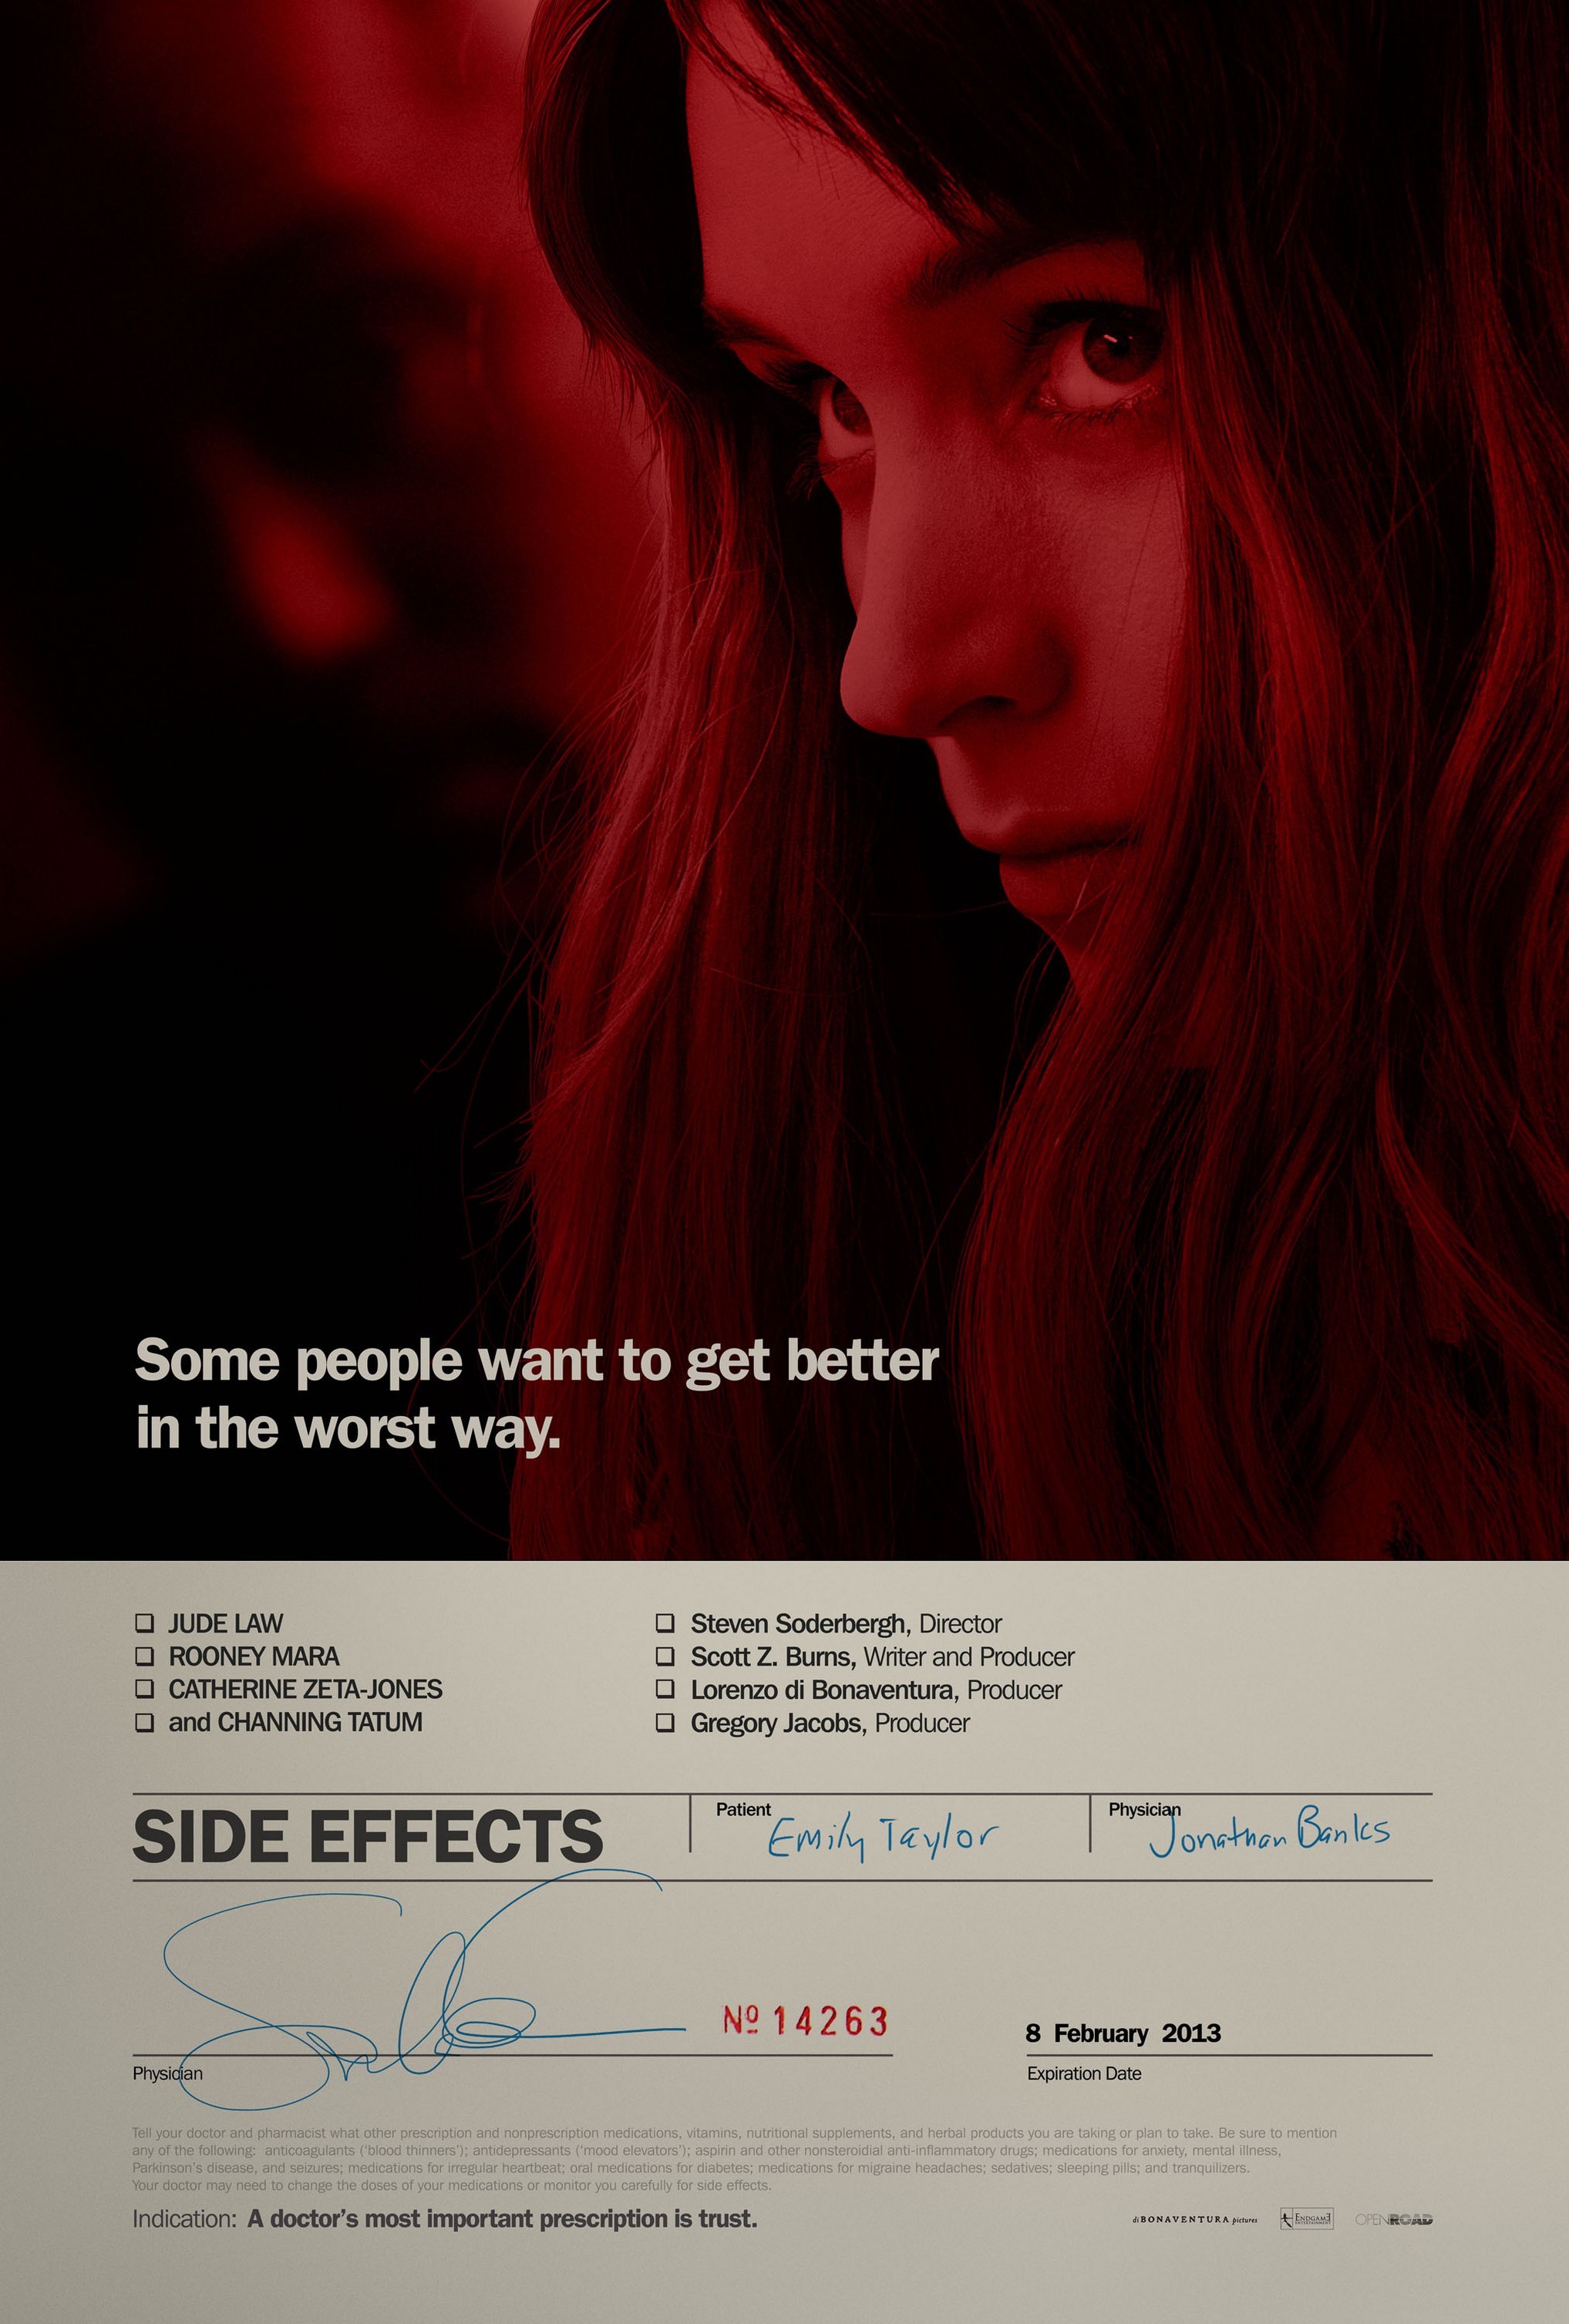 Rooney Mara: Emily Taylor | Side Effects / Effets secondaires | Steven Soderbergh, 2013